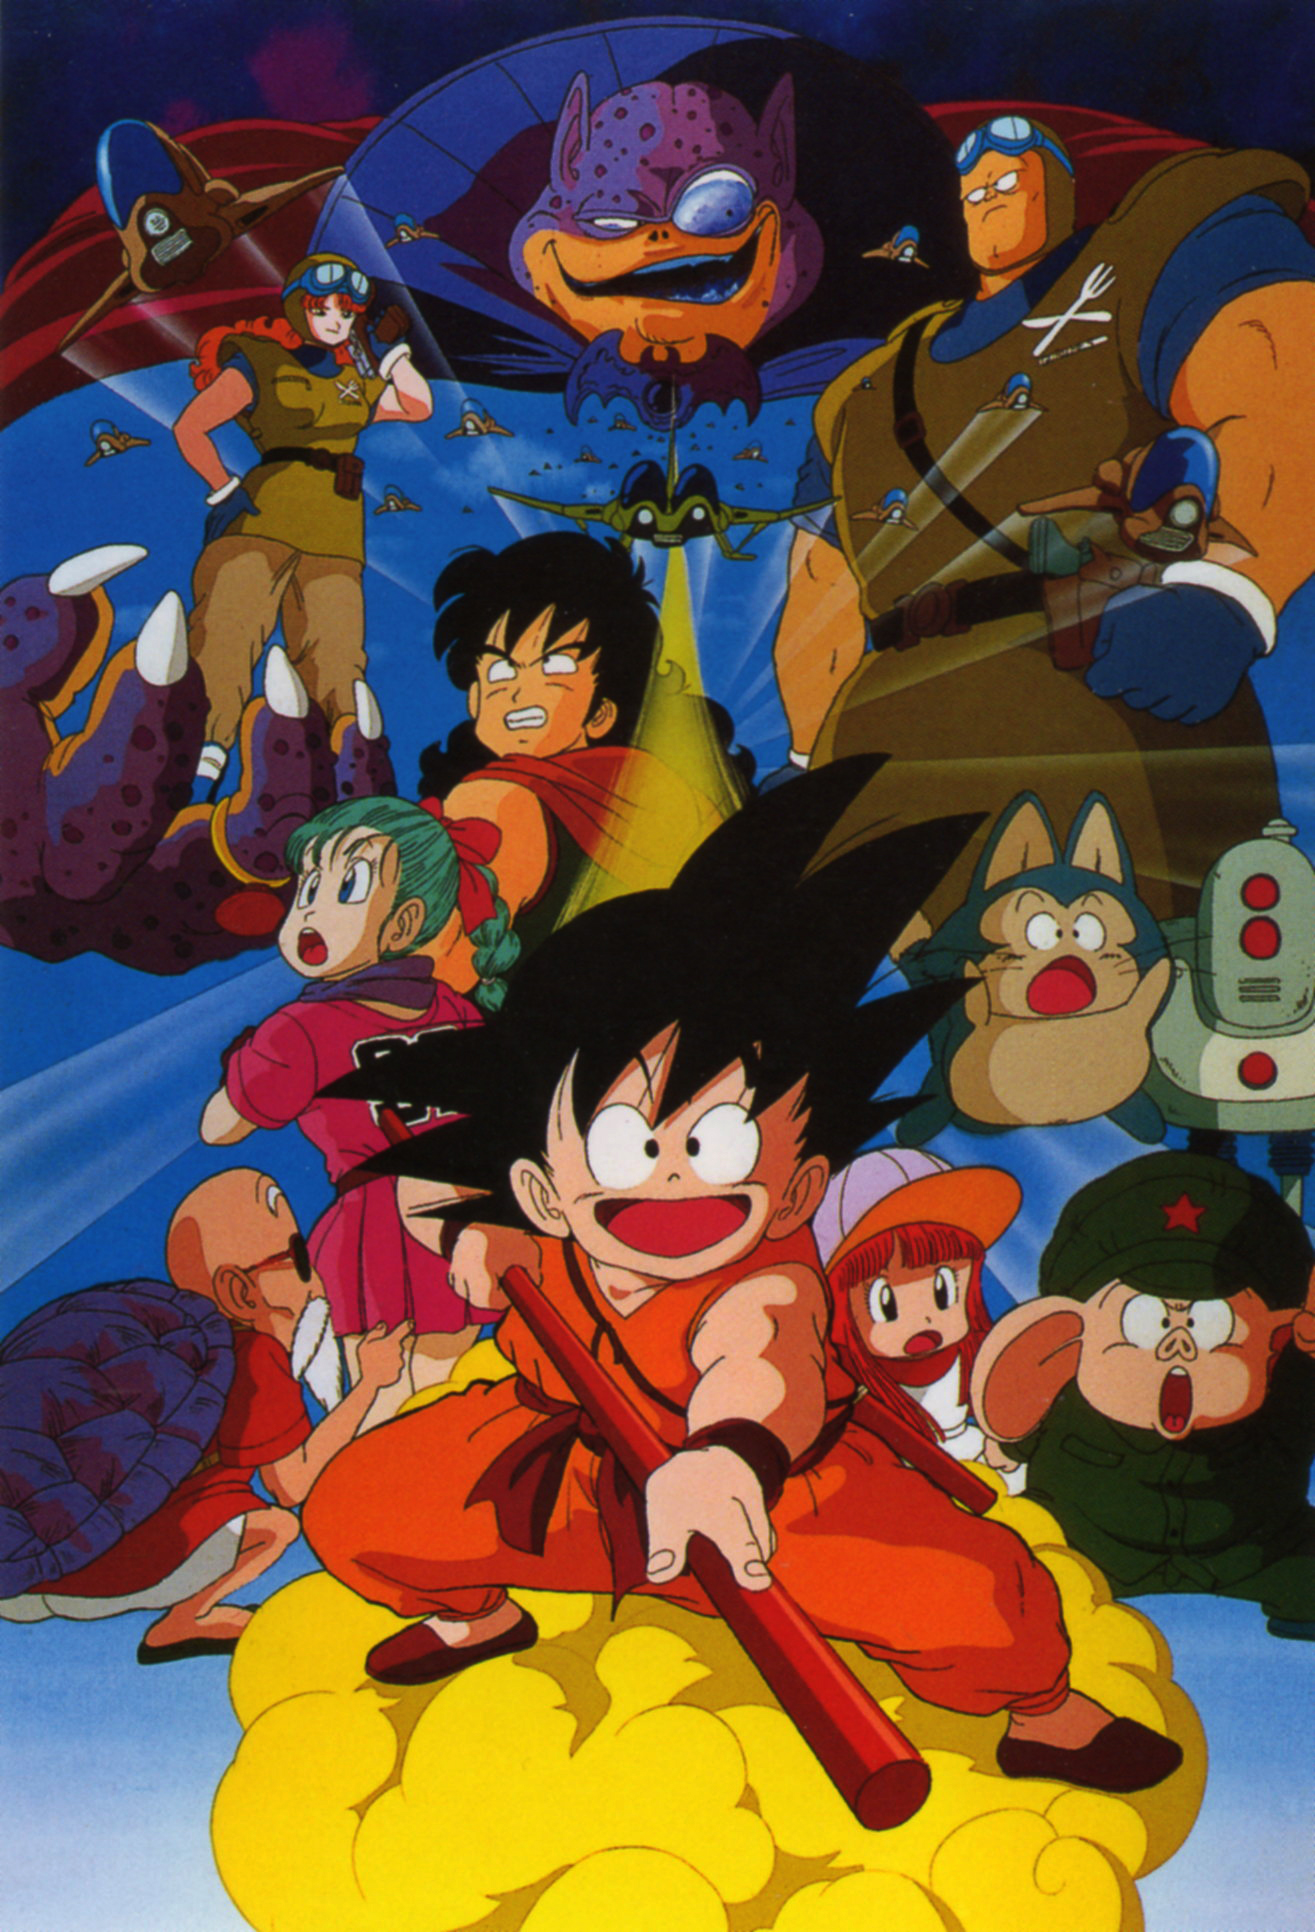 Dragon Ball Z: Movie Collection 1-13 + TV Specials (DVD) Masako Nozawa